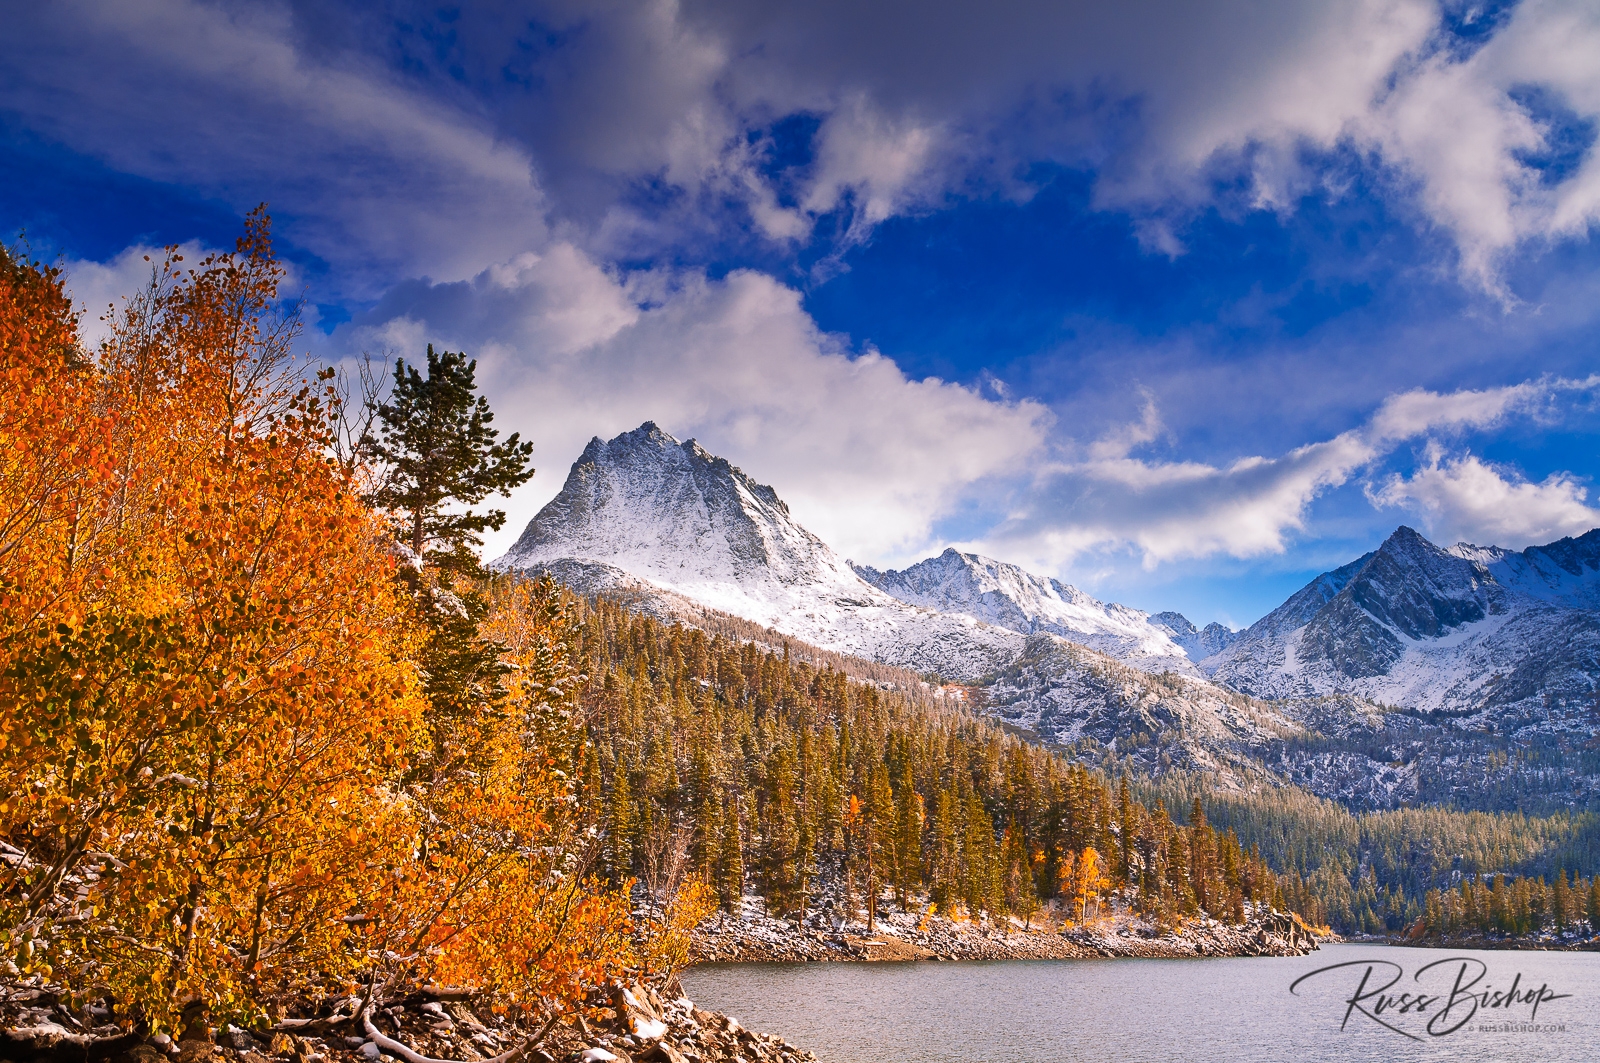 Fall aspens under Sierra peaks from South Lake, John Muir Wilderness, California